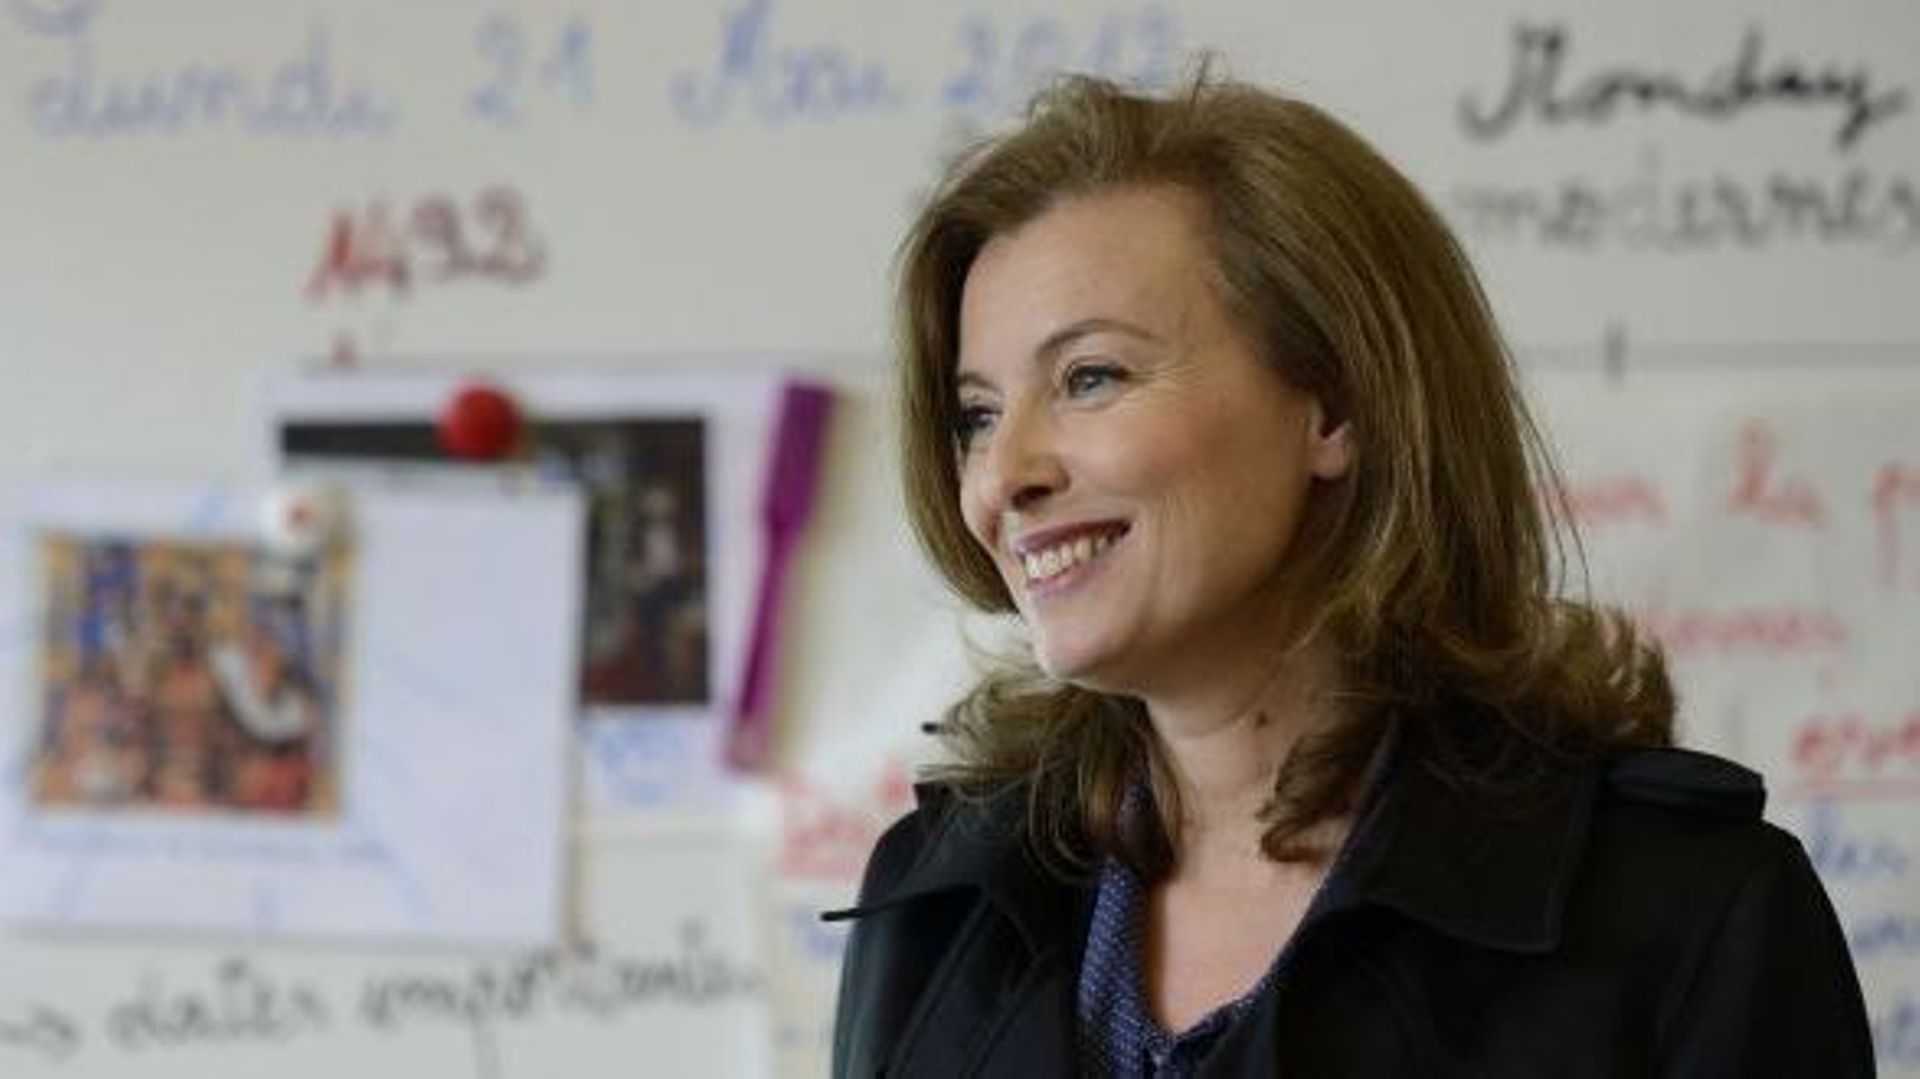 Valérie Trierweiler, compagne de François Hollande, reste journaliste